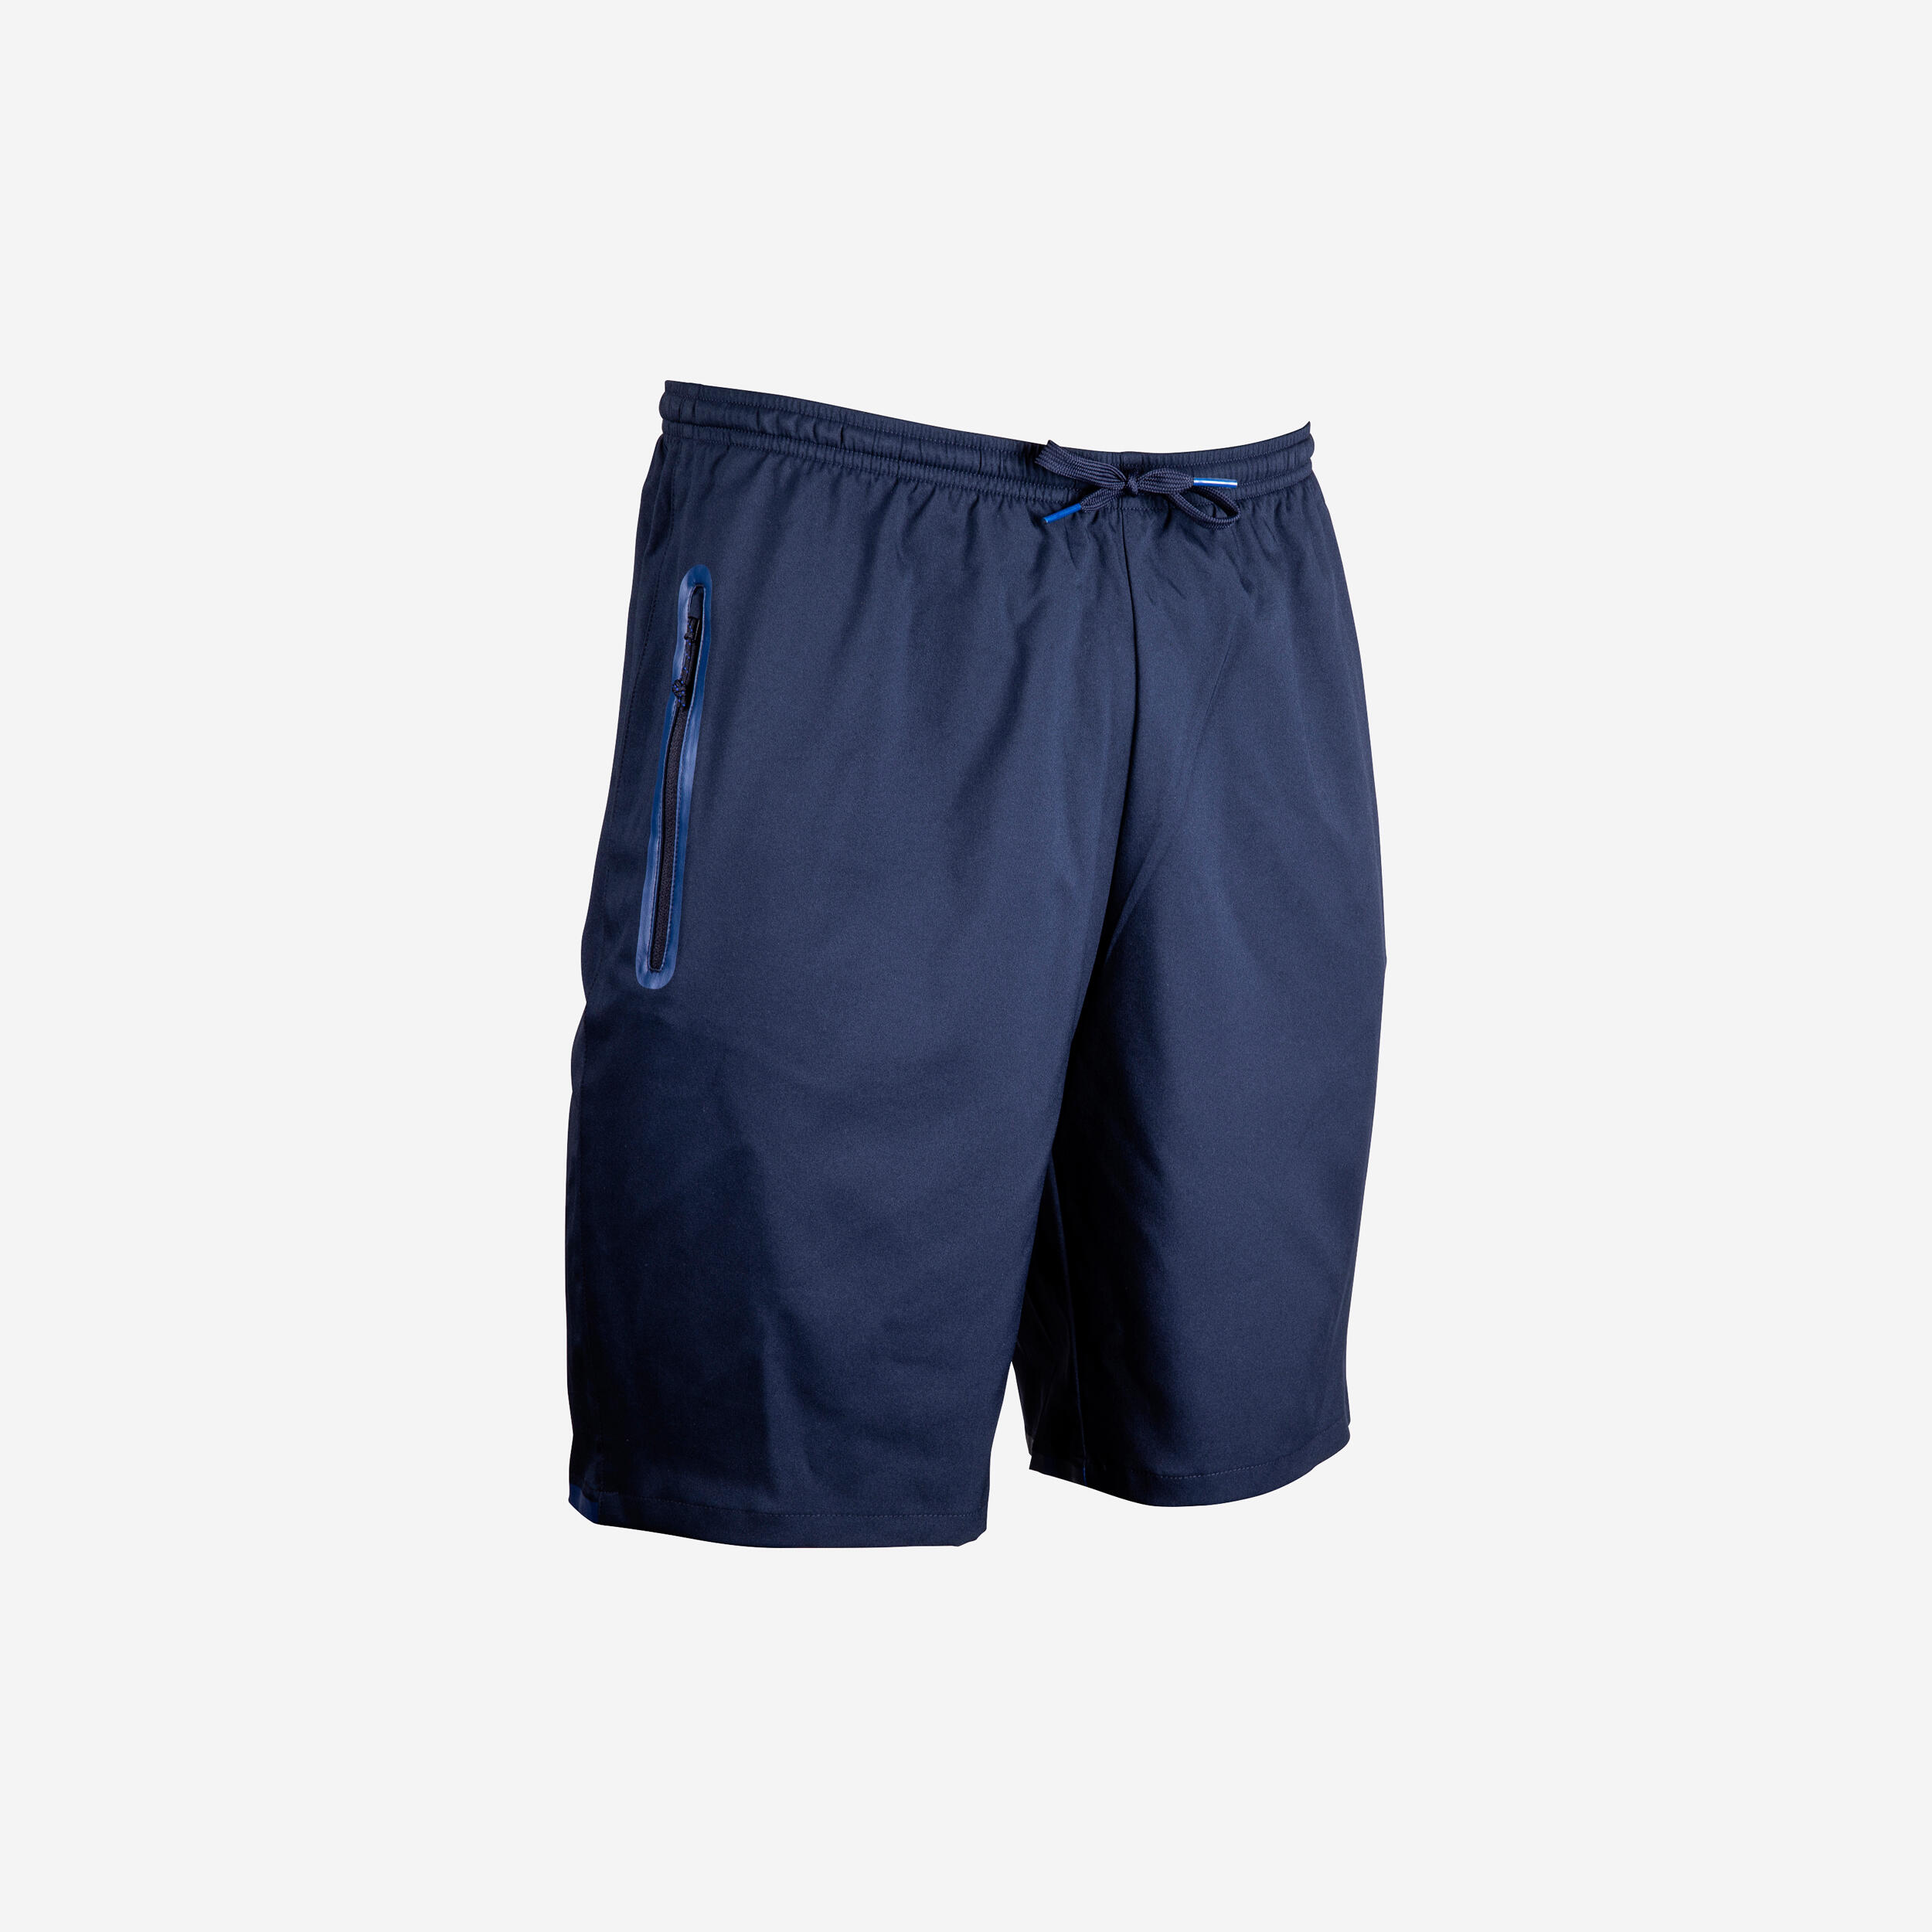 KIPSTA Adult Football Shorts with Zip Pockets Viralto Zip - Navy Blue